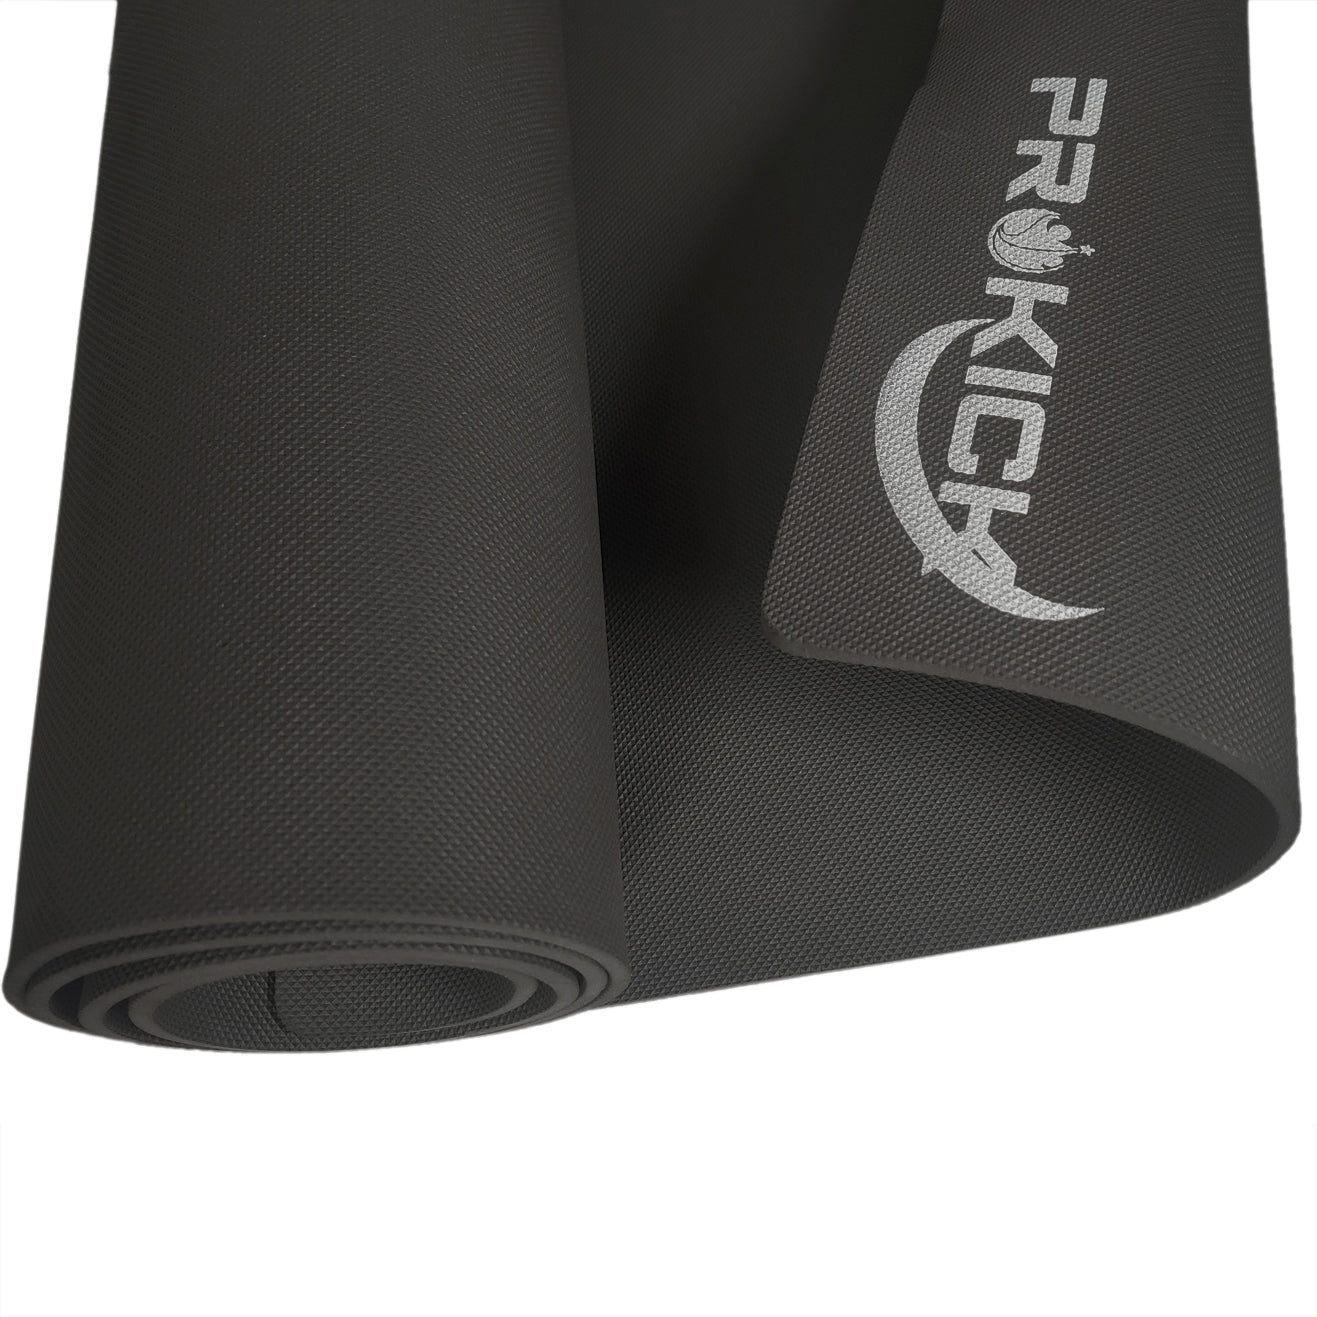 Prokick Anti Skid EVA Yoga mat with Strap, 8MM - Best Price online Prokicksports.com